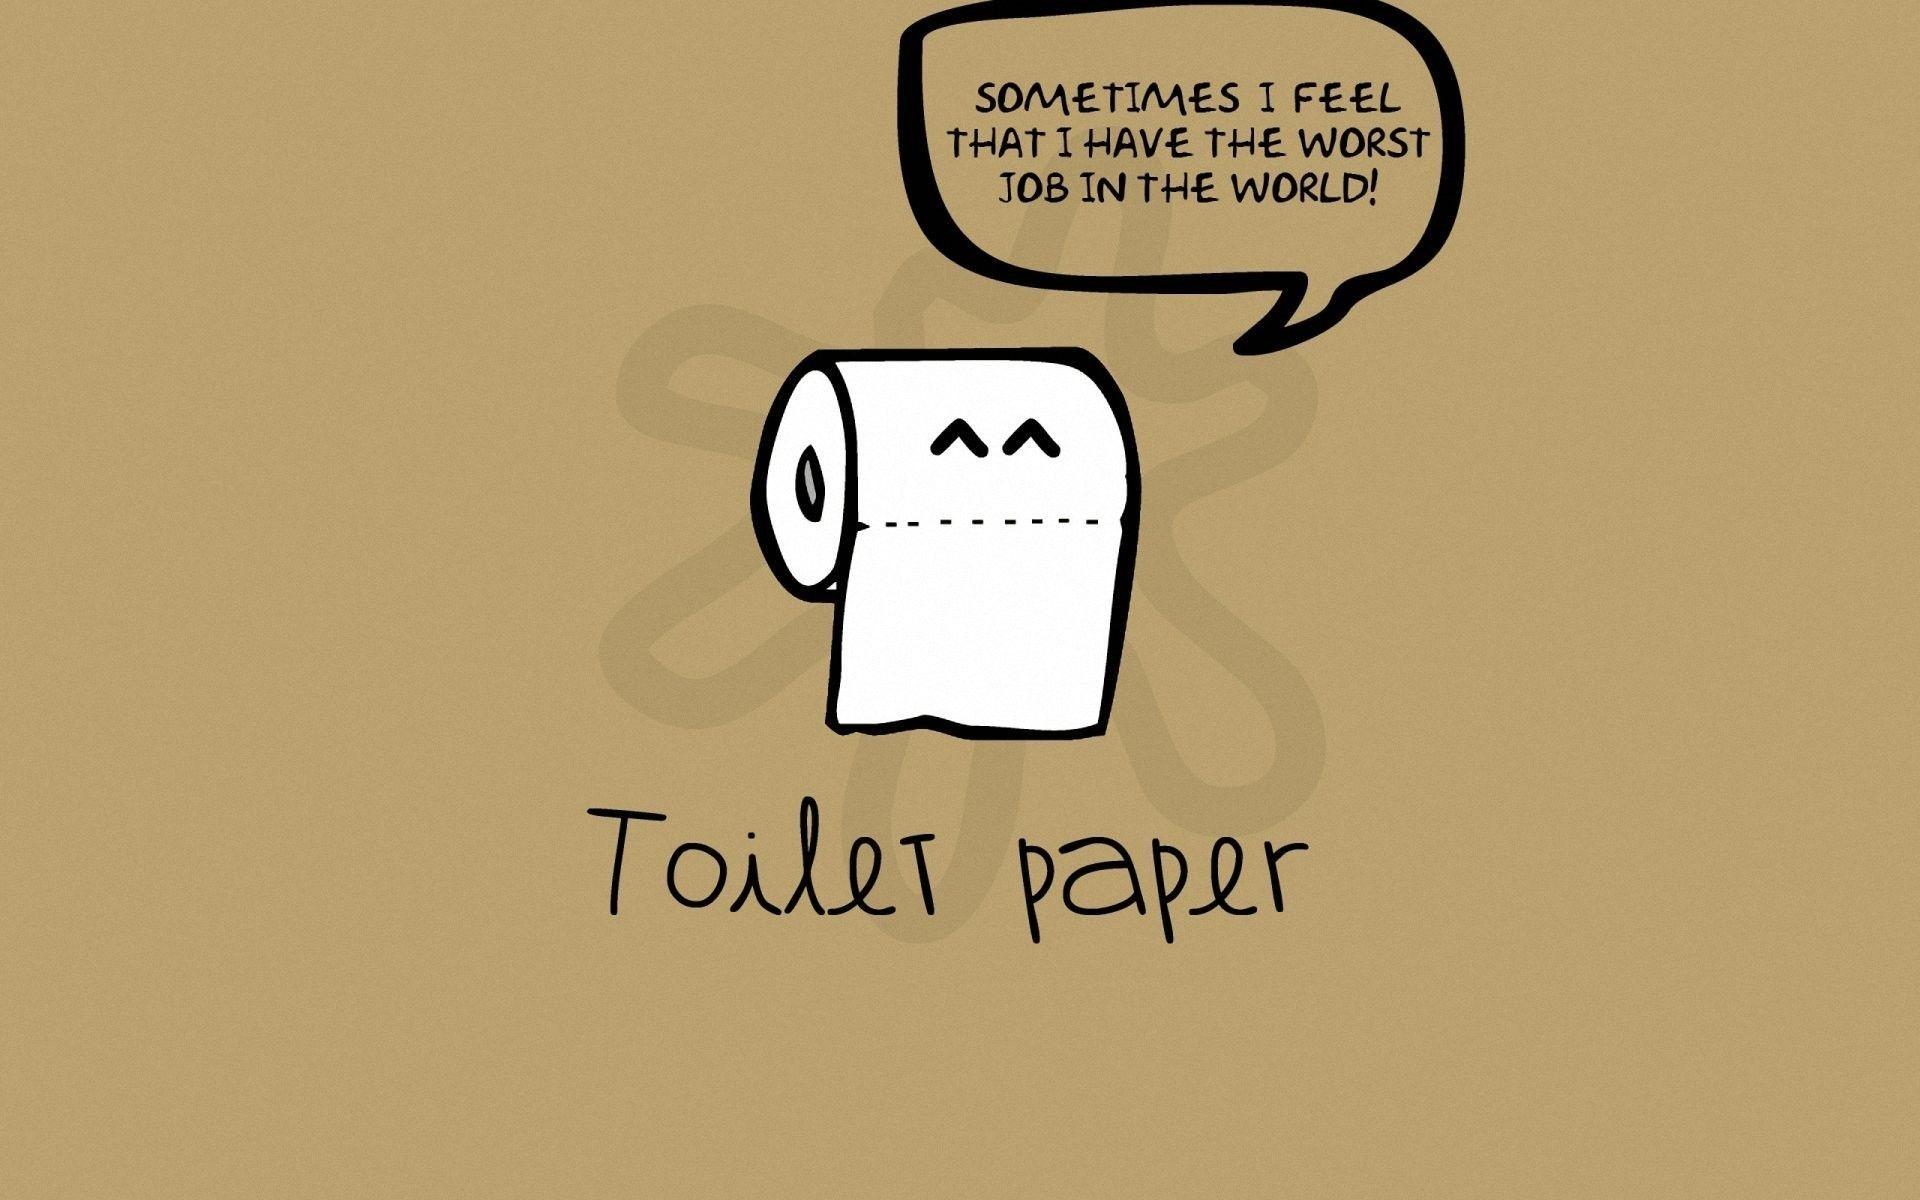 Wallpaper.wiki Funny Toilet Paper Reddit Sayings Image PIC WPD004477